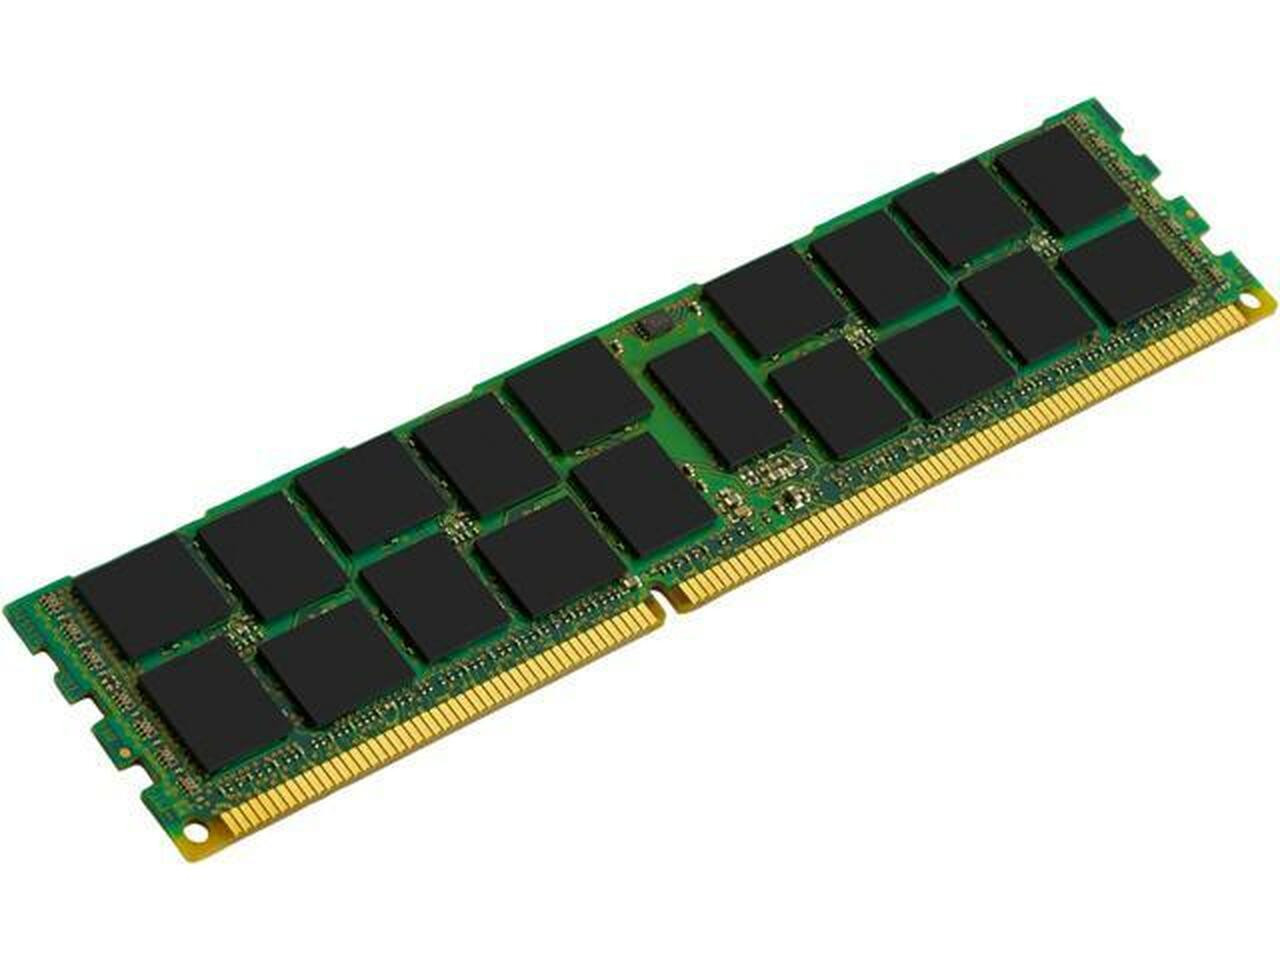 Netpatibles 8GB DDR3 SDRAM Memory Module - MEMDR380LSL08ER16NPM